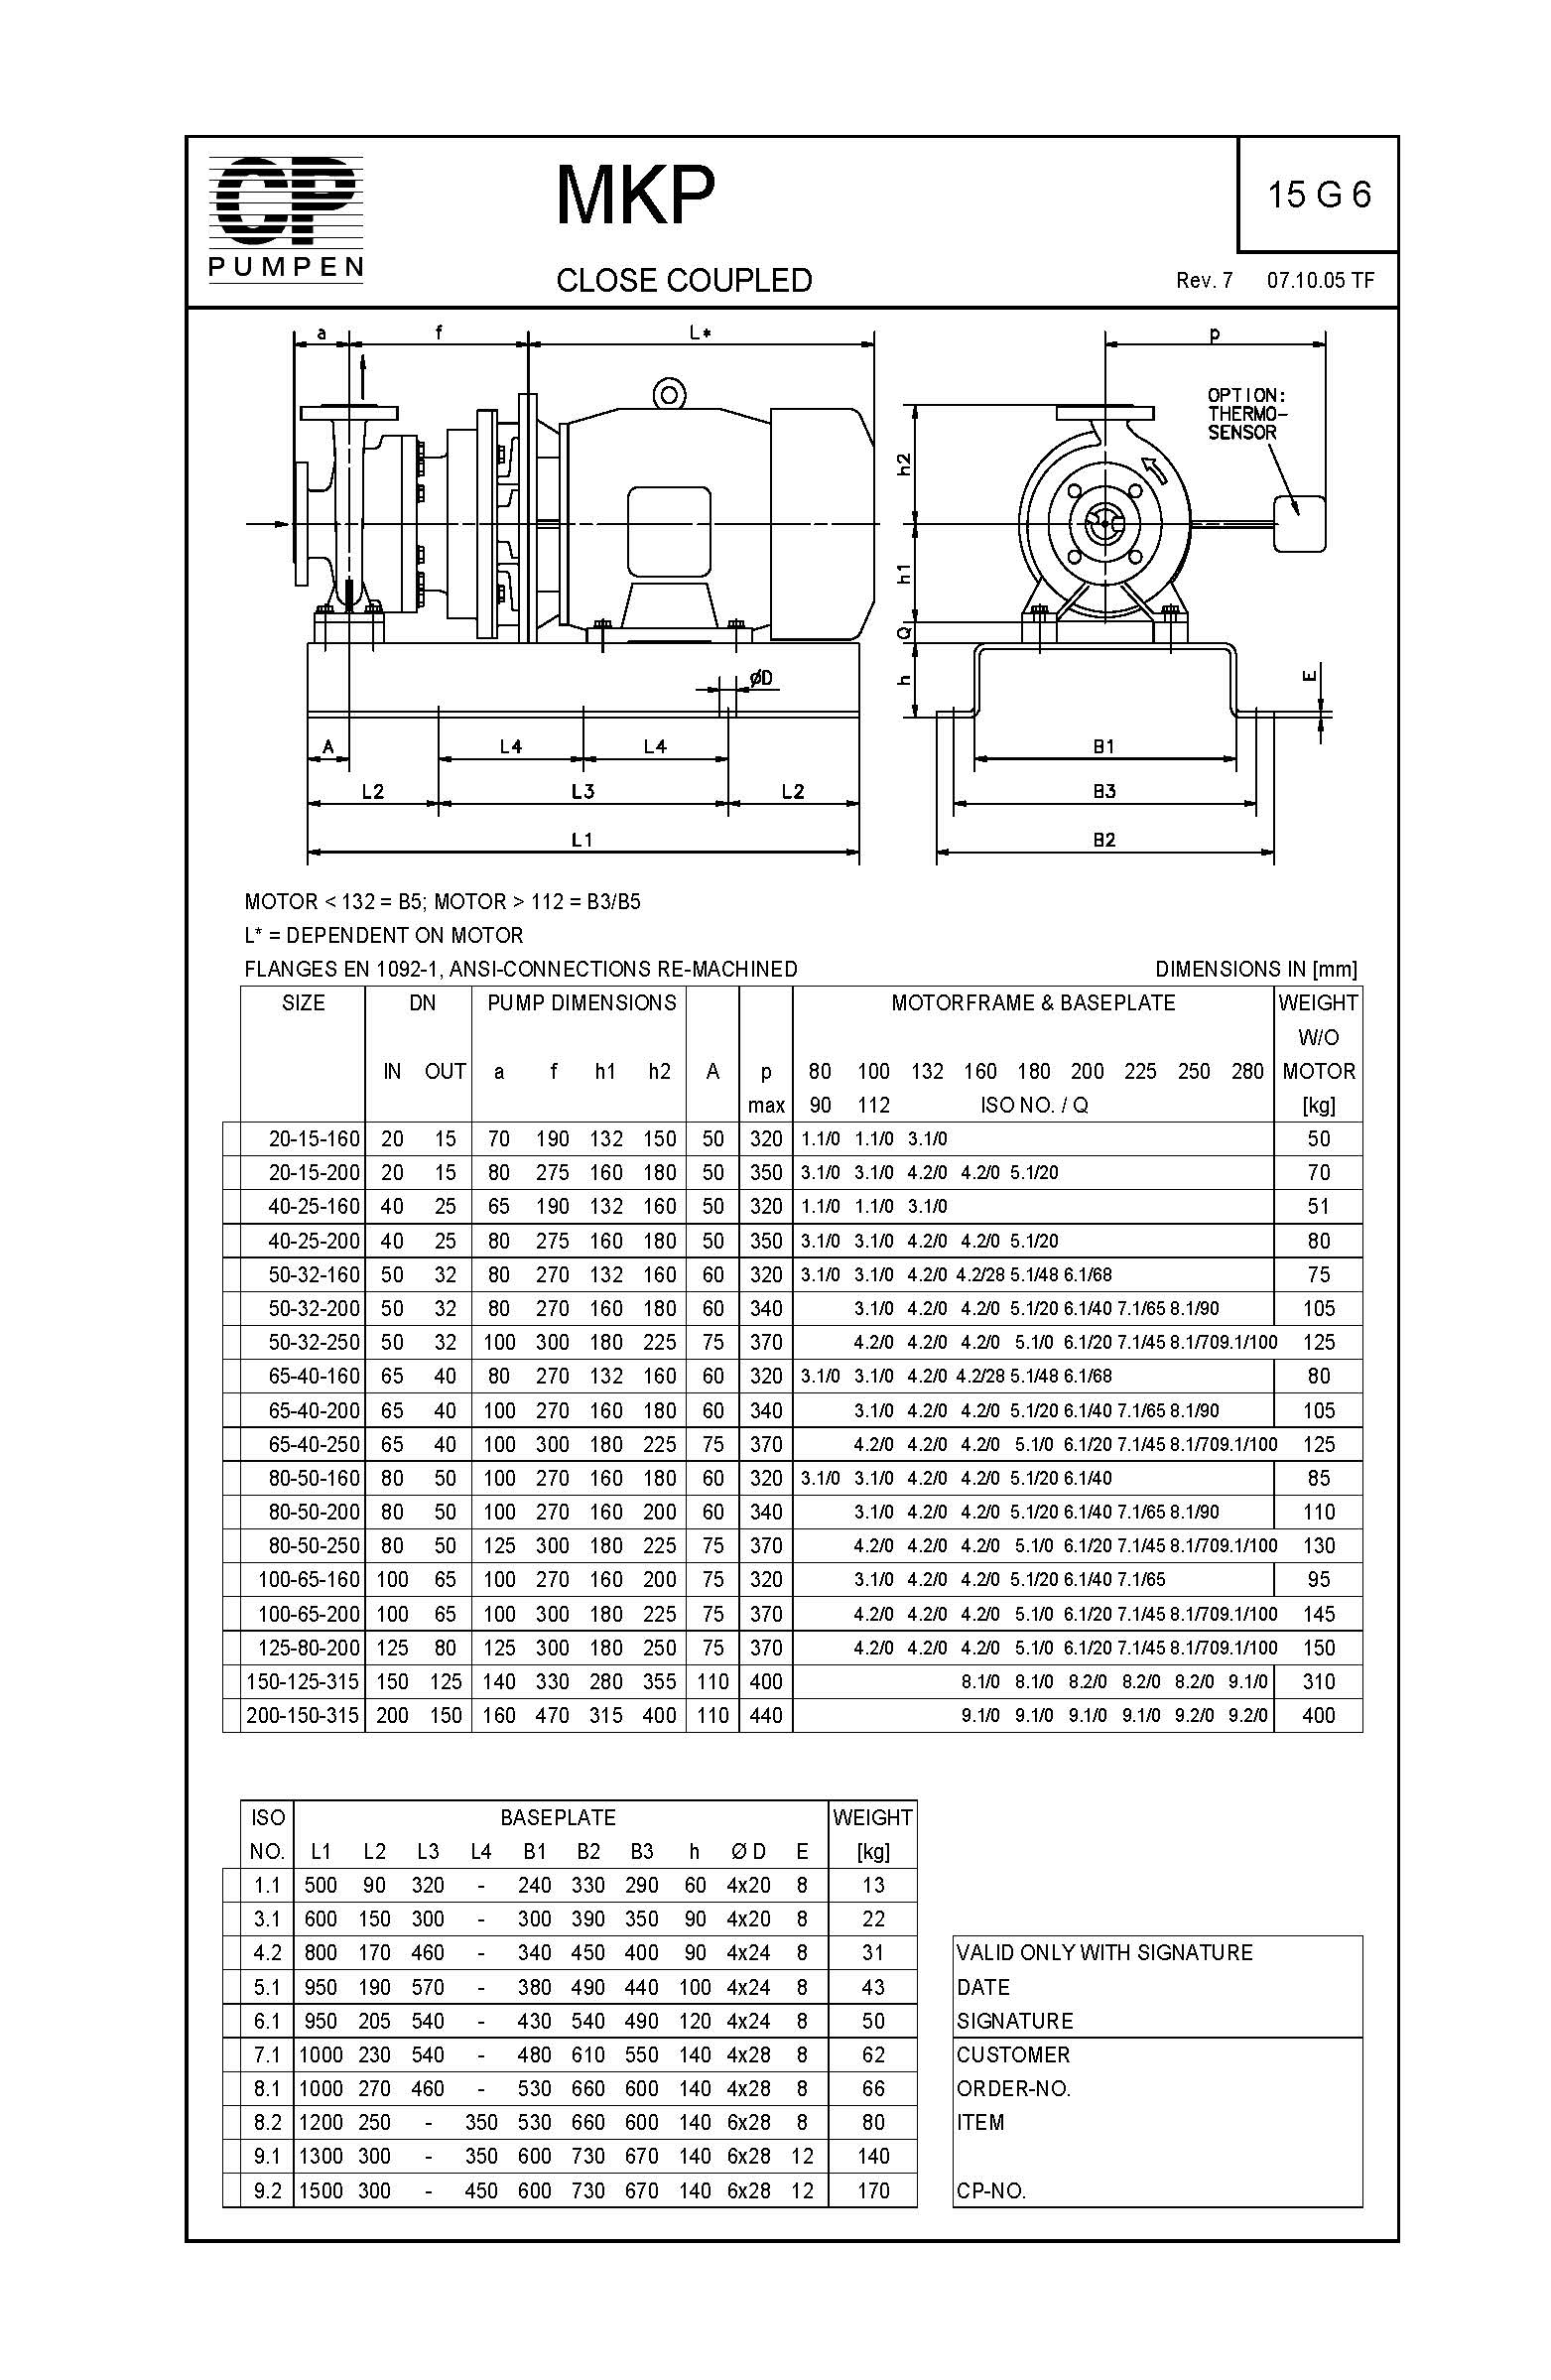 DimensionalDrawing MKP CloseCoupled I 04 Baseplate Motor 15G6 Rev07